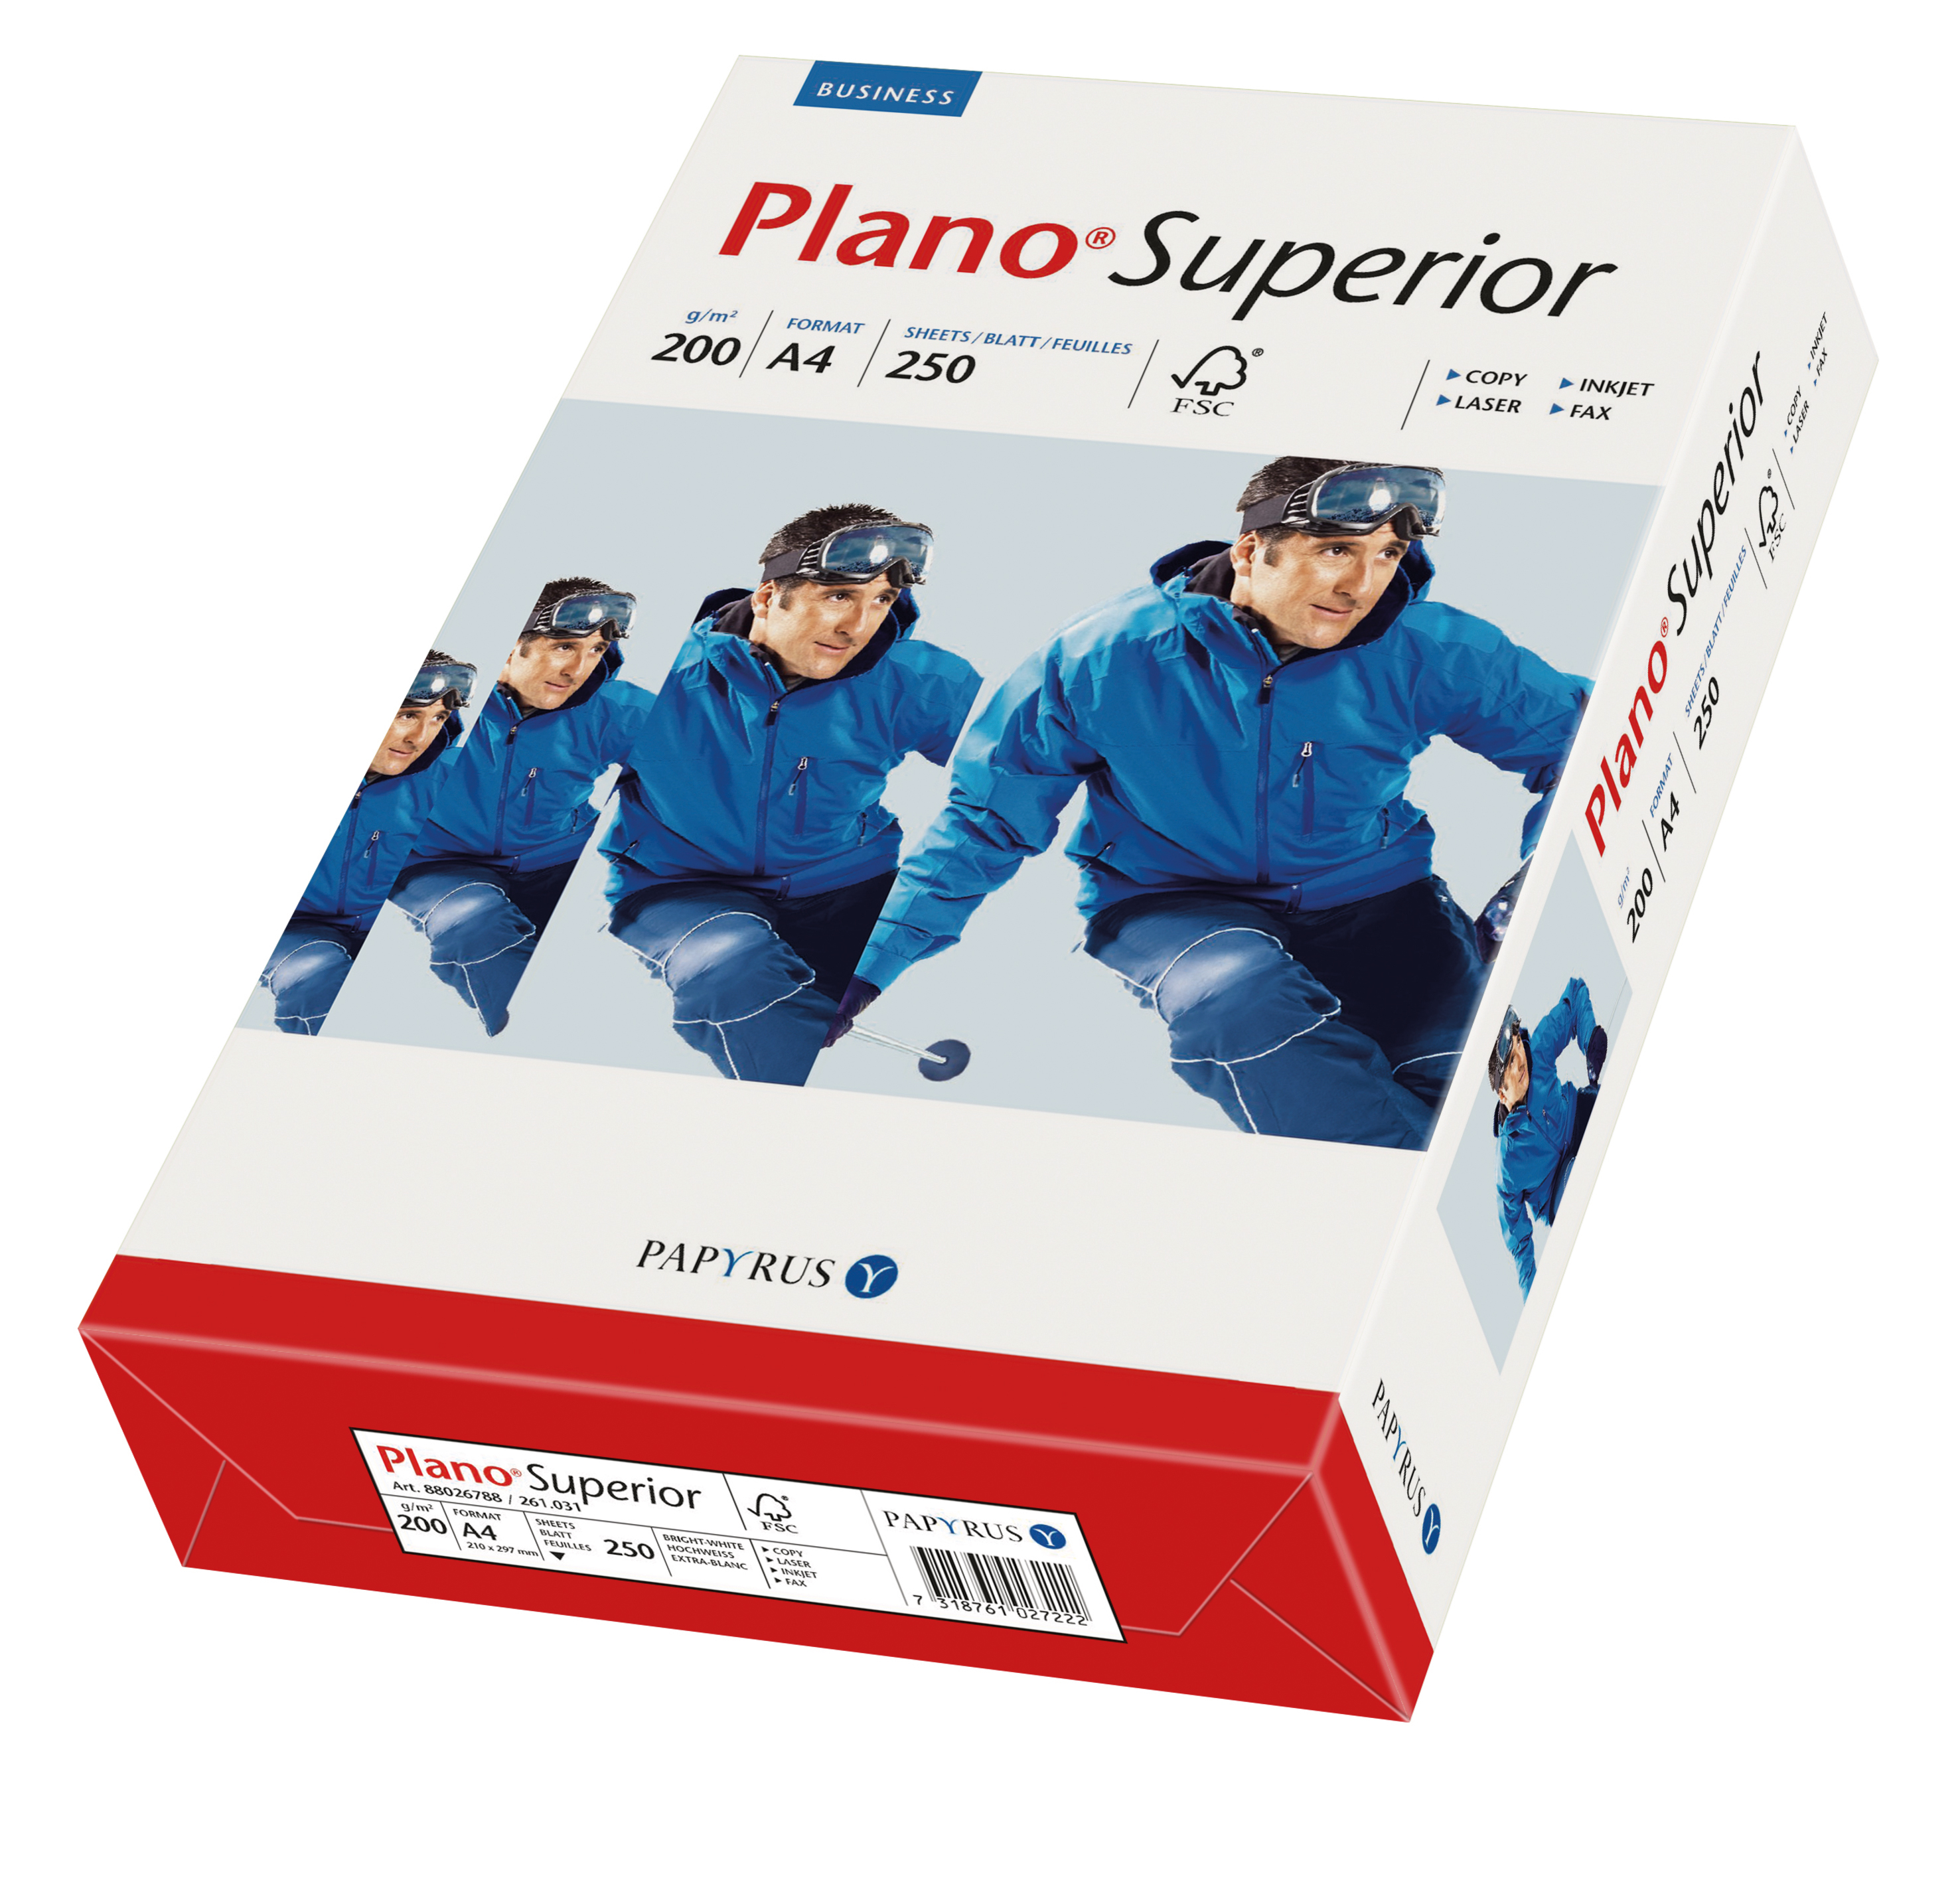 PAPYRUS Copy Paper Plano Superior A4 88026788 blanc, 200g SB FSC 250 flls. blanc, 200g SB FSC 250 fl